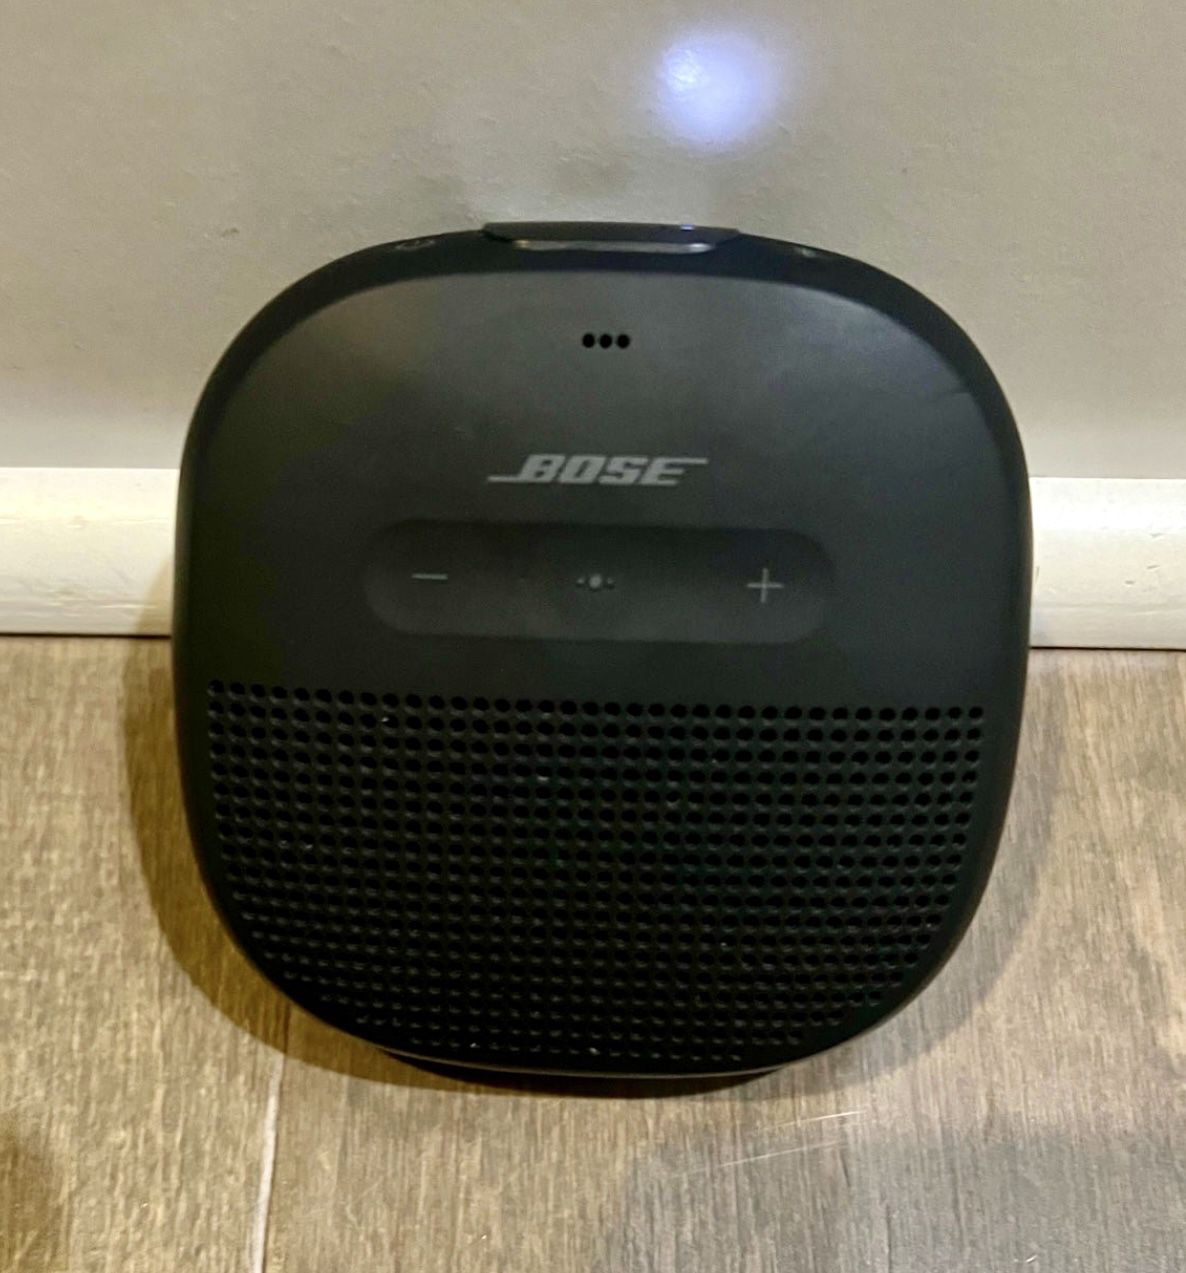 Bose Soundlink Micro portable speaker